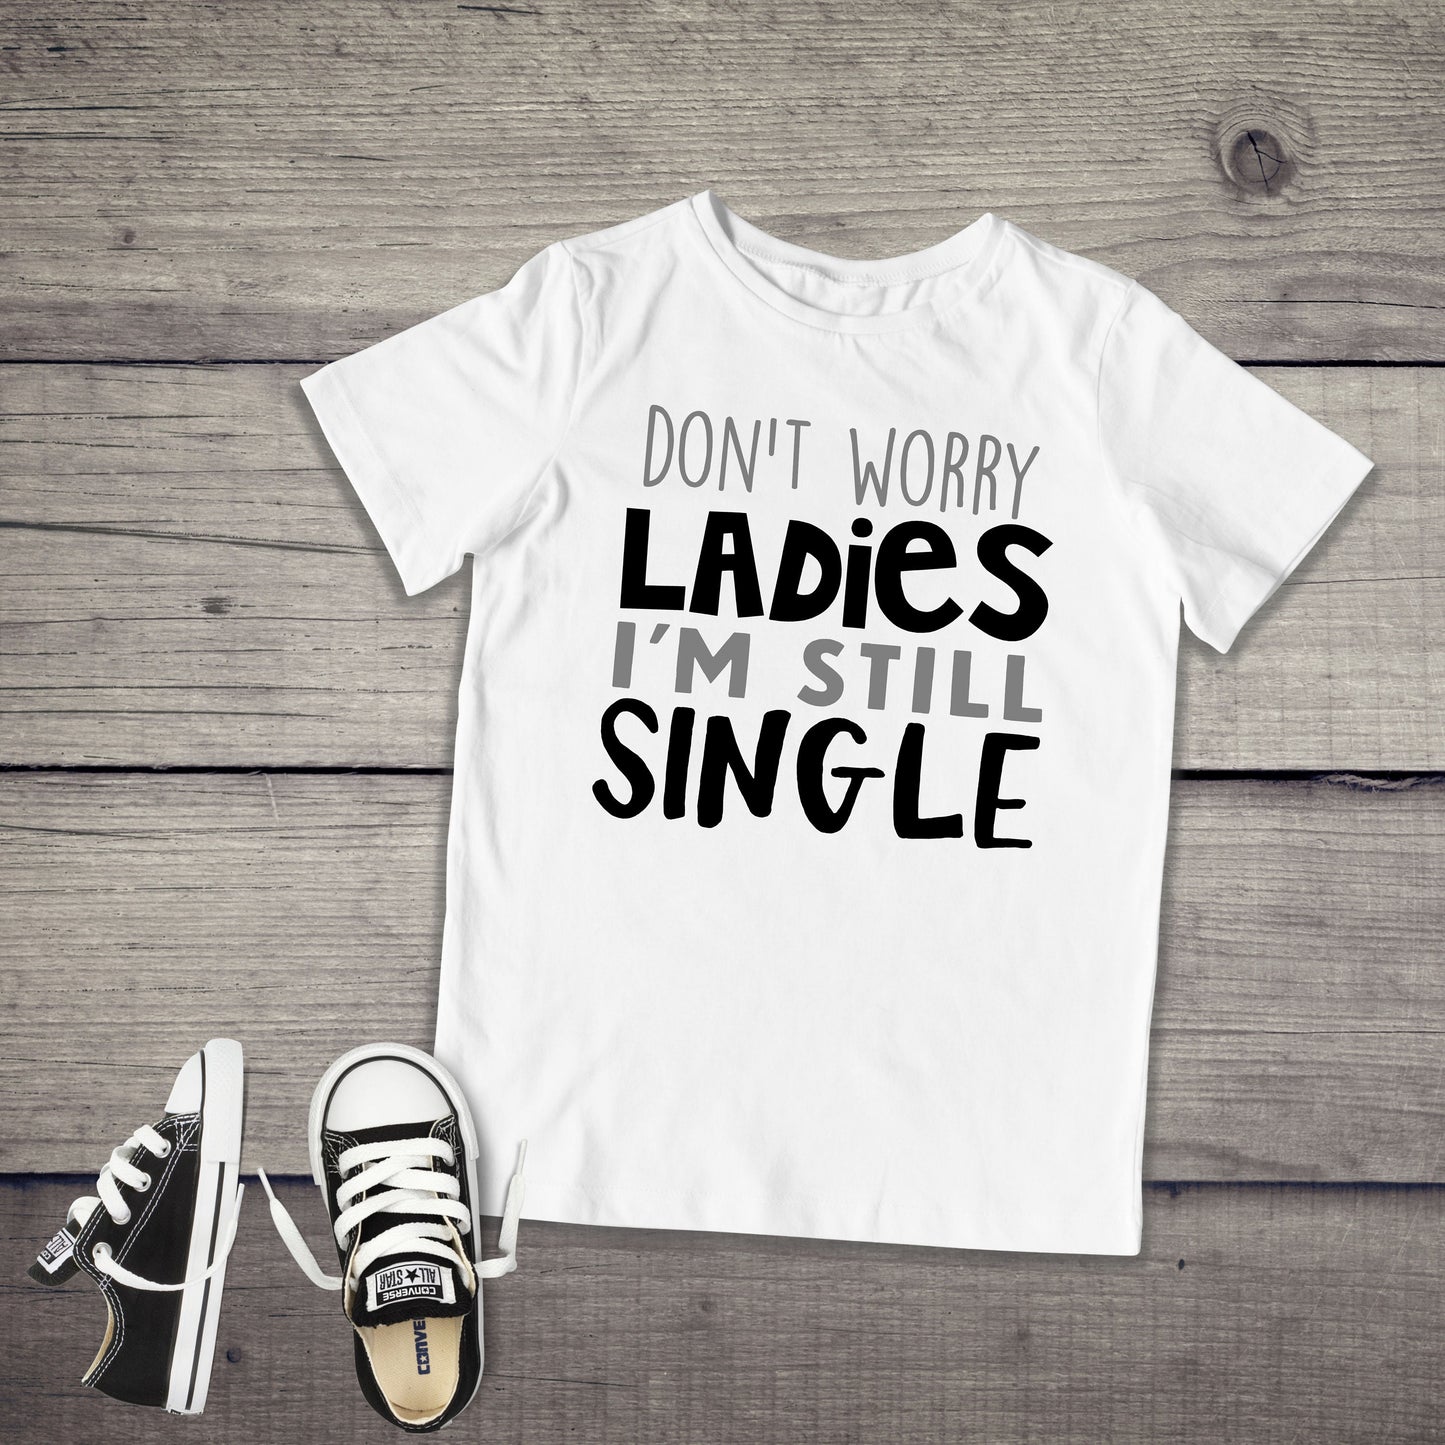 Don't Worry Ladies I'm Still Single Infant or Toddler Shirt or Bodysuit - Cute Toddler Shirt - Toddler Boy Gift - Preschool Shirt - Baby Boy